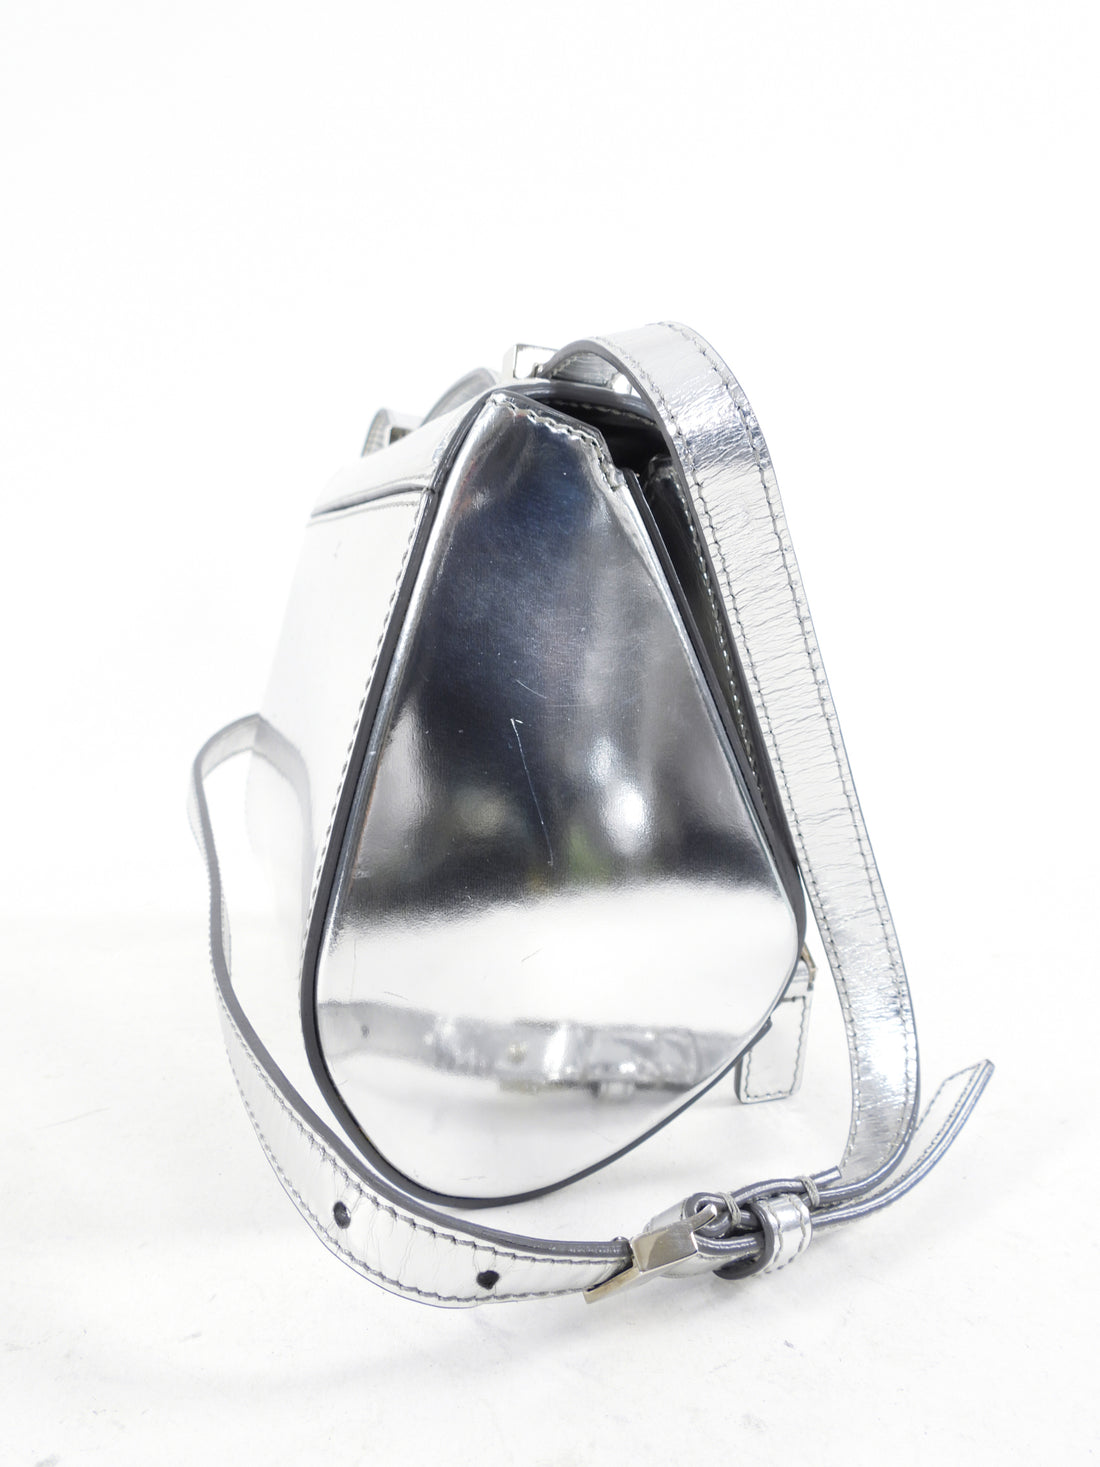 Givenchy Silver Metallic Leather Mini Pandora Box Bag